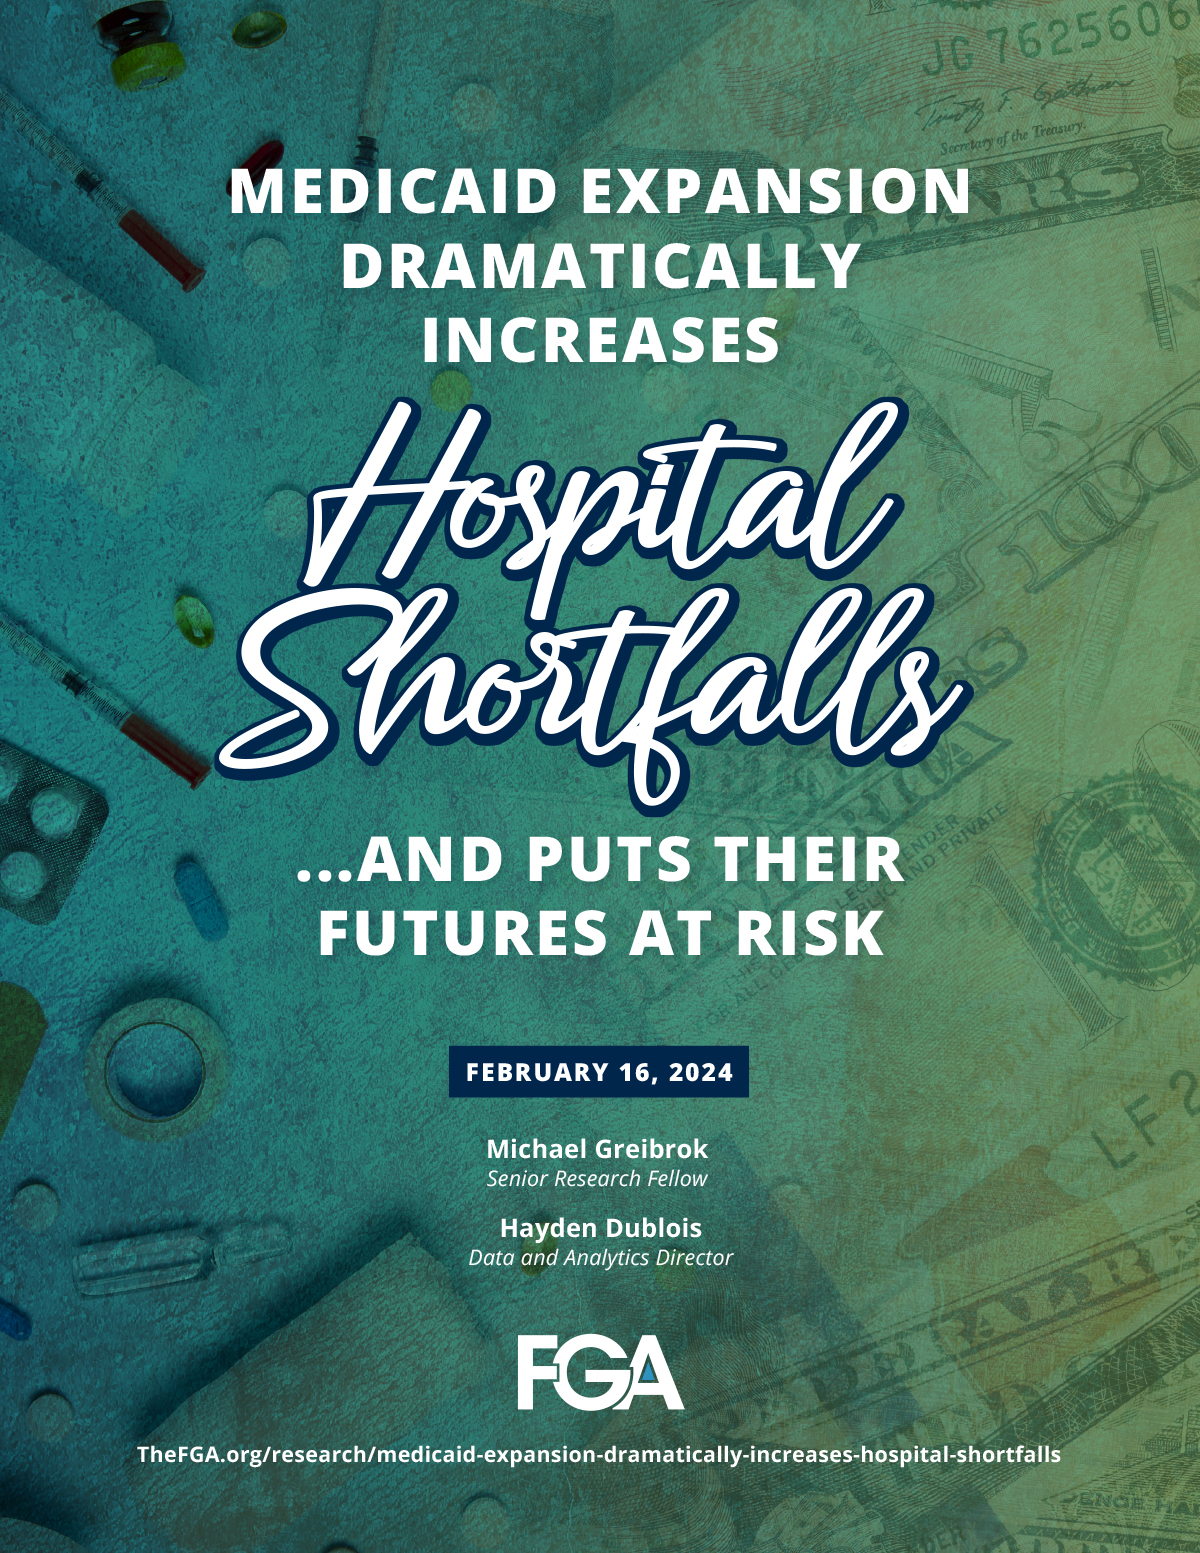 Medicaid Expansion Dramatically Increases Hospital Shortfalls …and Puts Their Futures at Risk